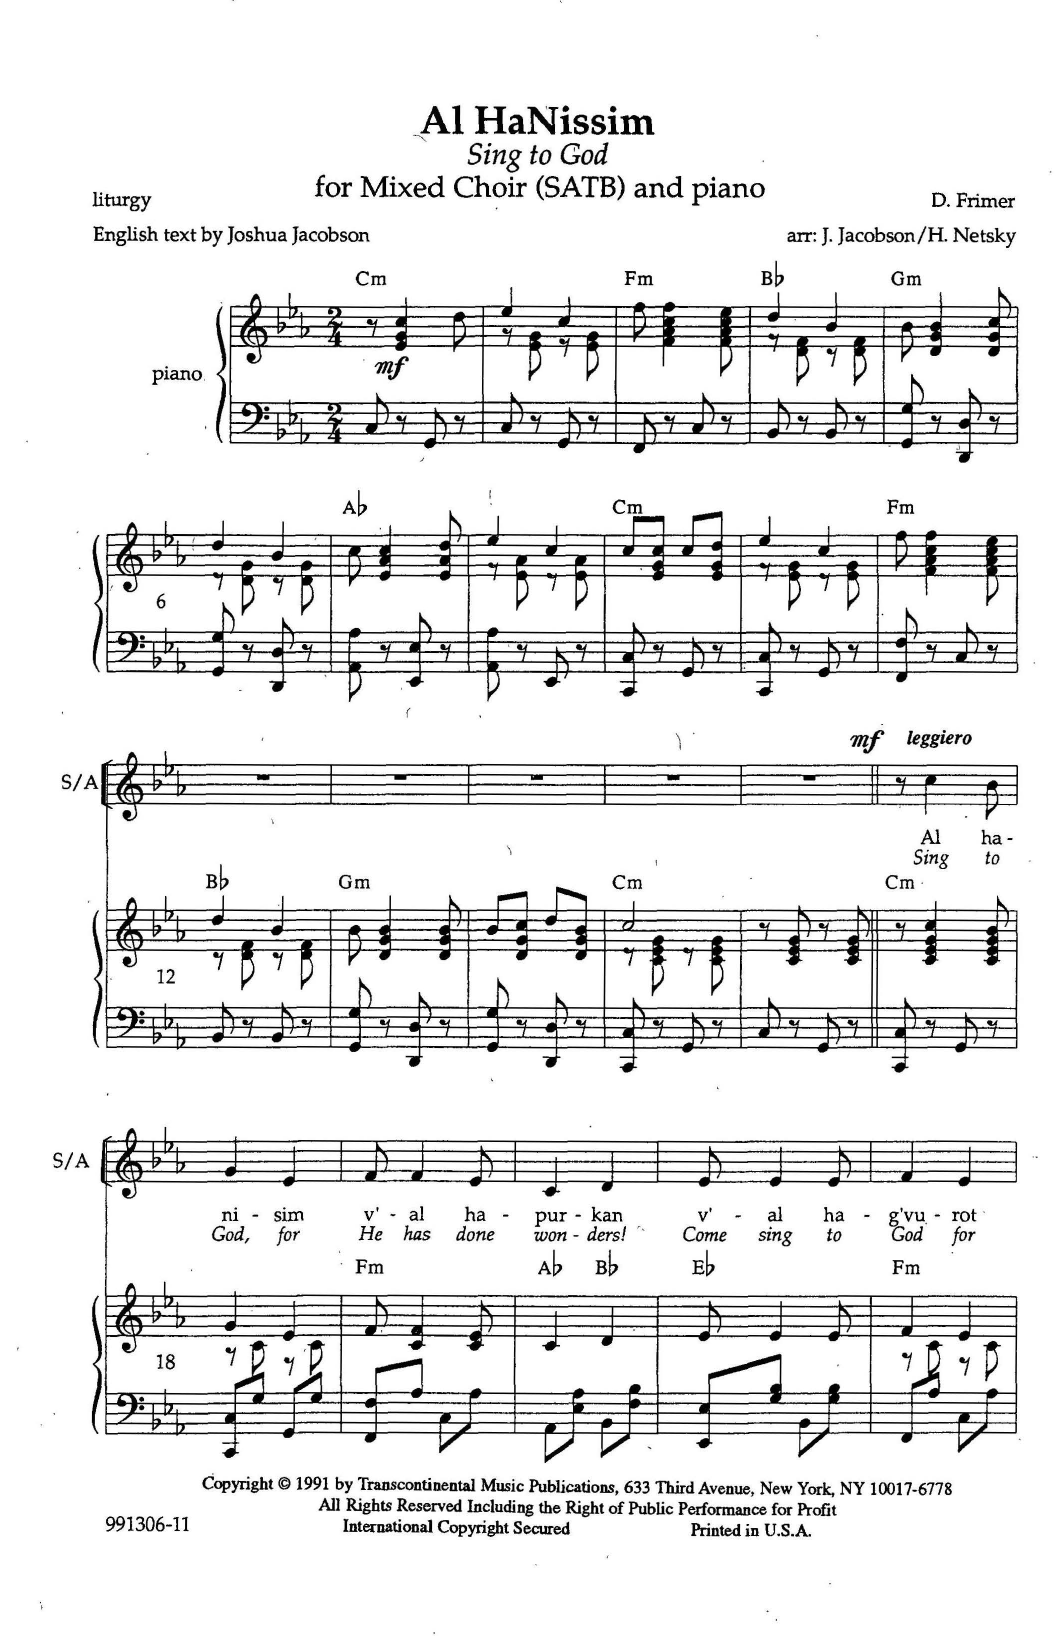 Dov Frimer Al HaNissim (Sing to God) (arr. Joshua R. Jacobson and Hankus Netsky) sheet music notes and chords arranged for SATB Choir